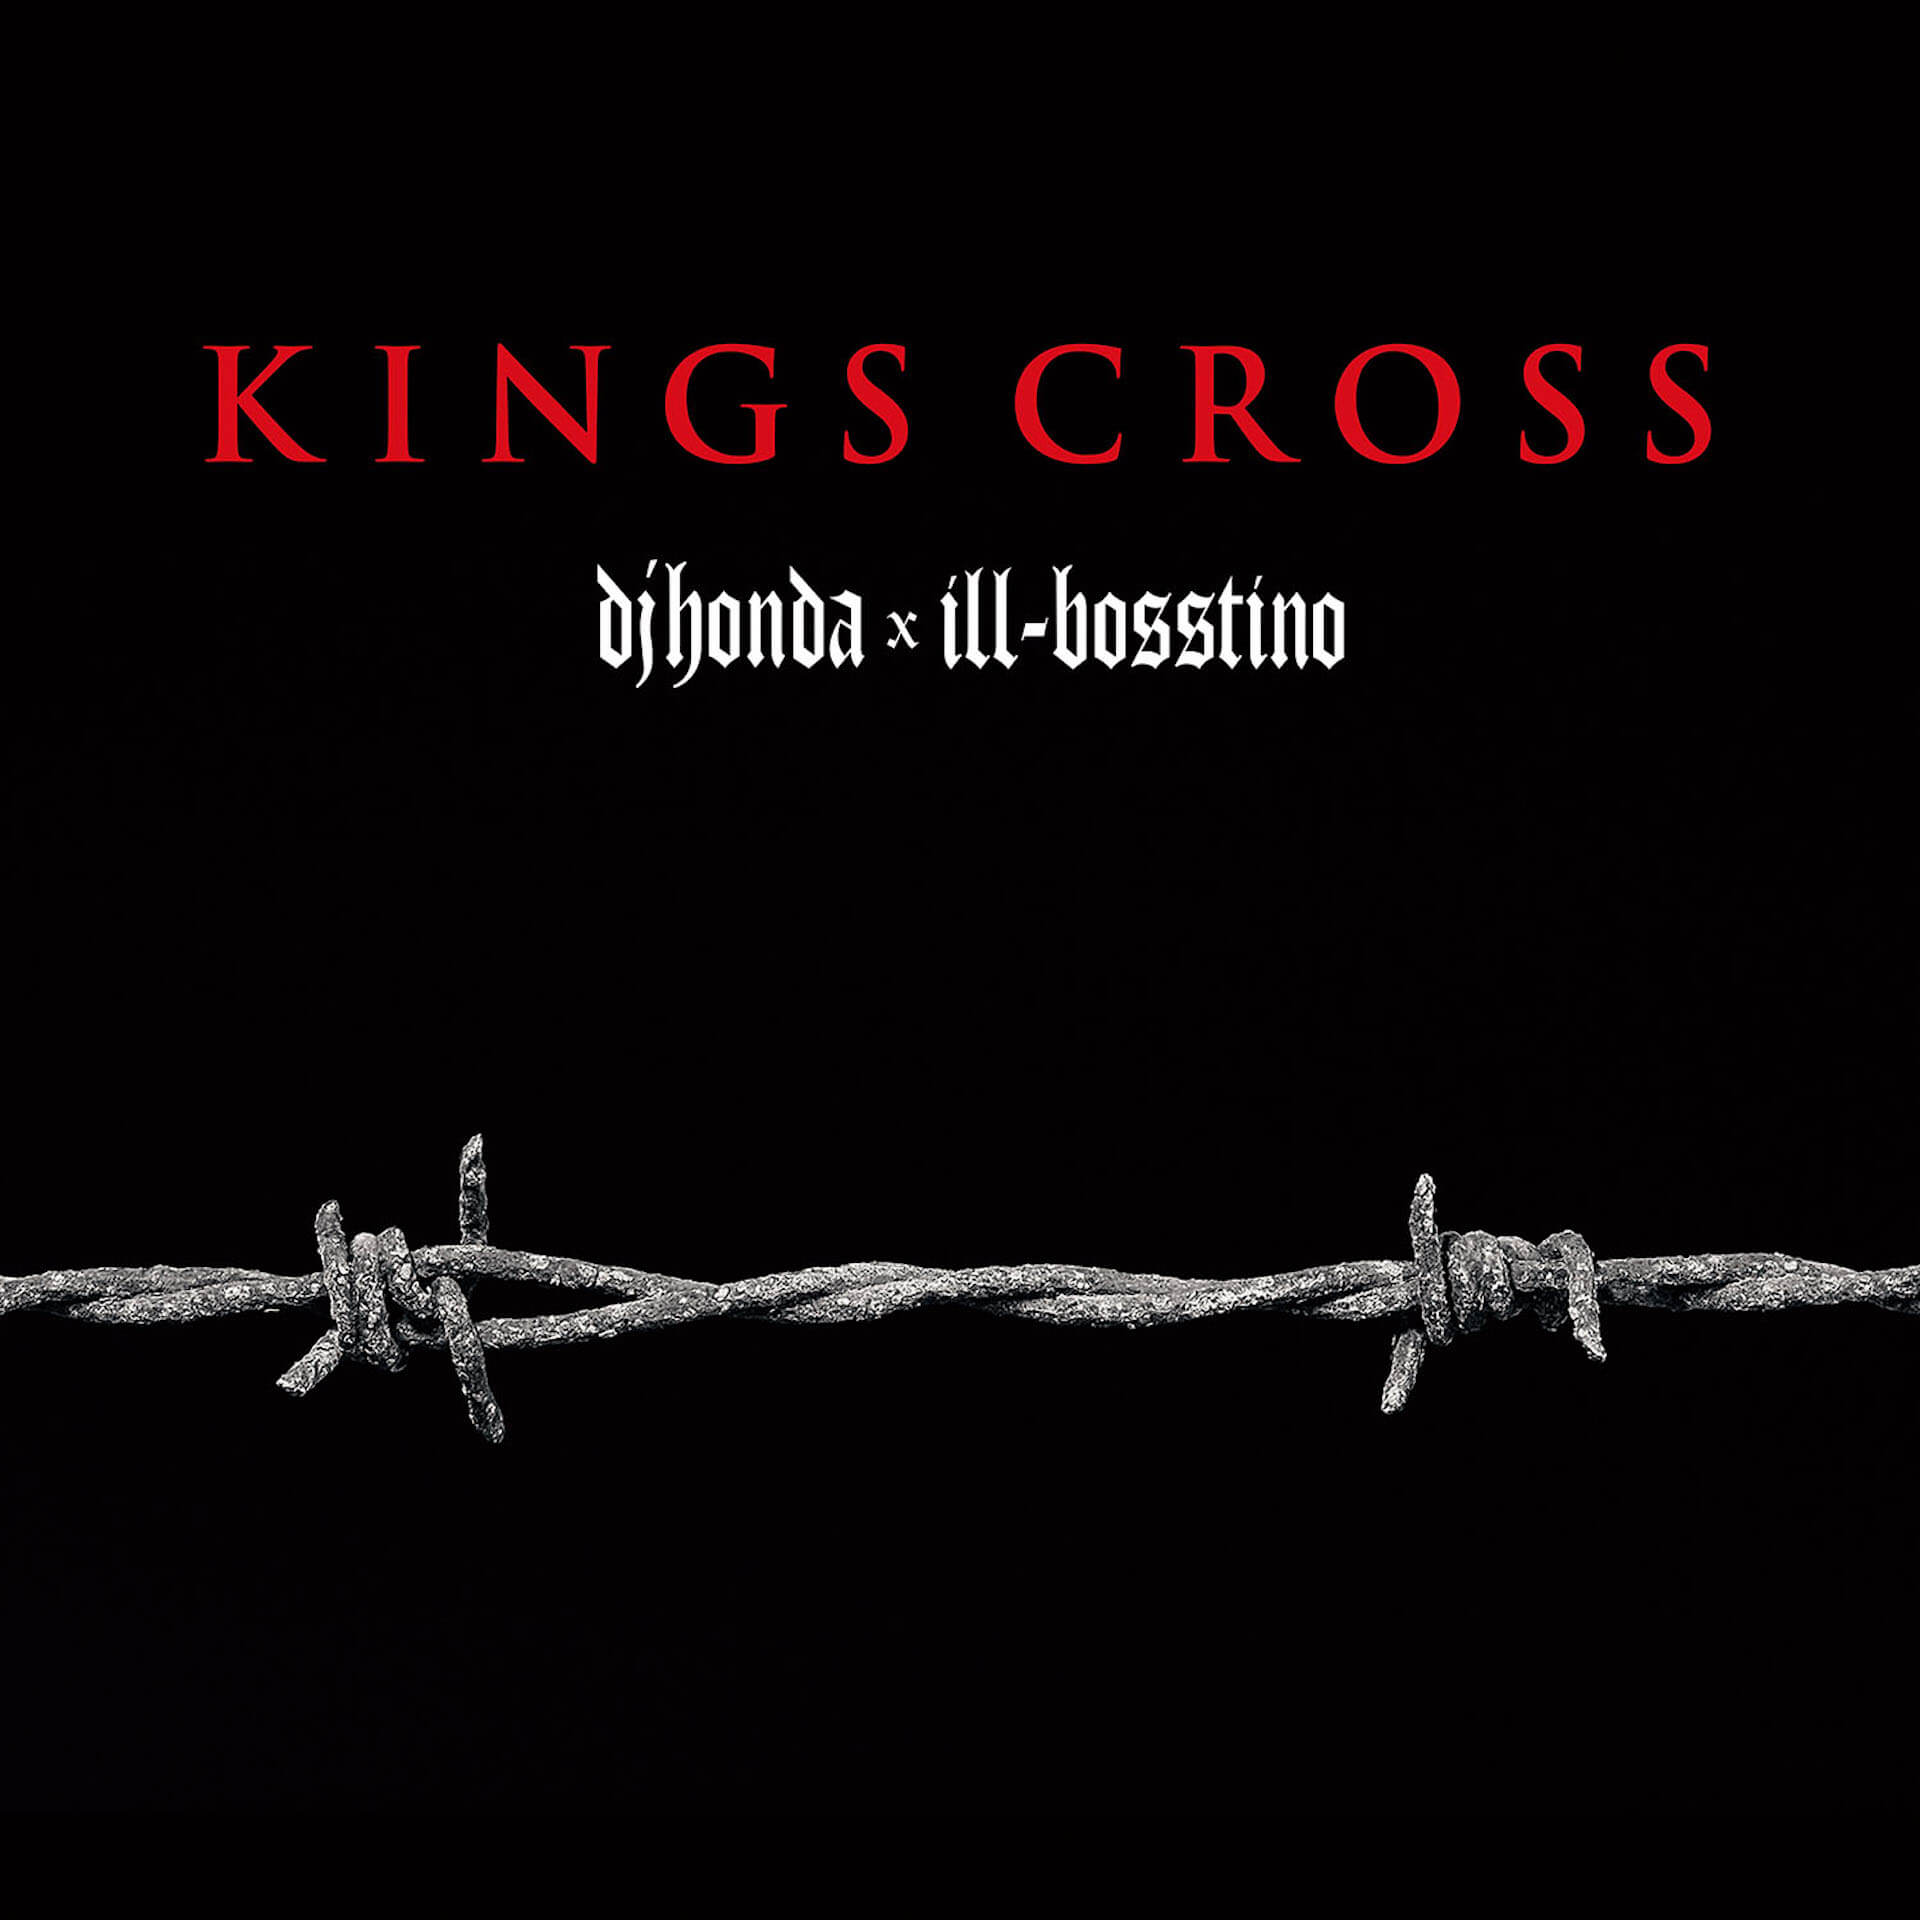 THA BLUE HERBのILL-BOSSTINOとdj hondaによるアルバム『KINGS CROSS』のトラックリストとジャケット写真が公開！ music211015_king_cross_02